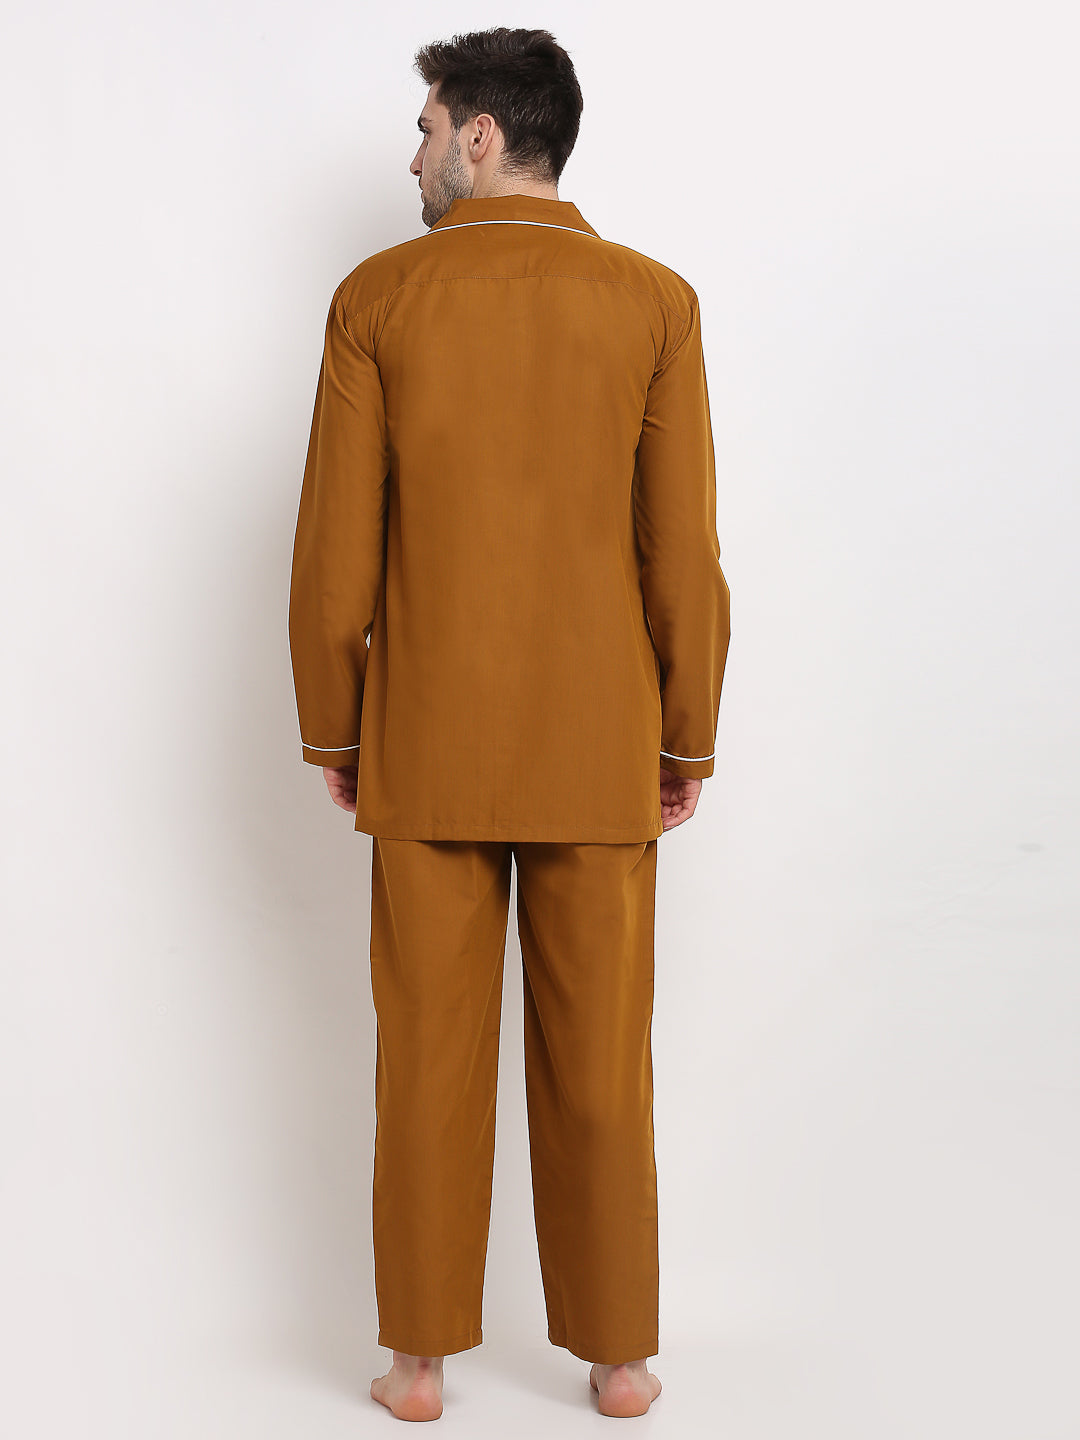 Jainish Men's Mustard Cotton Solid Night Suits